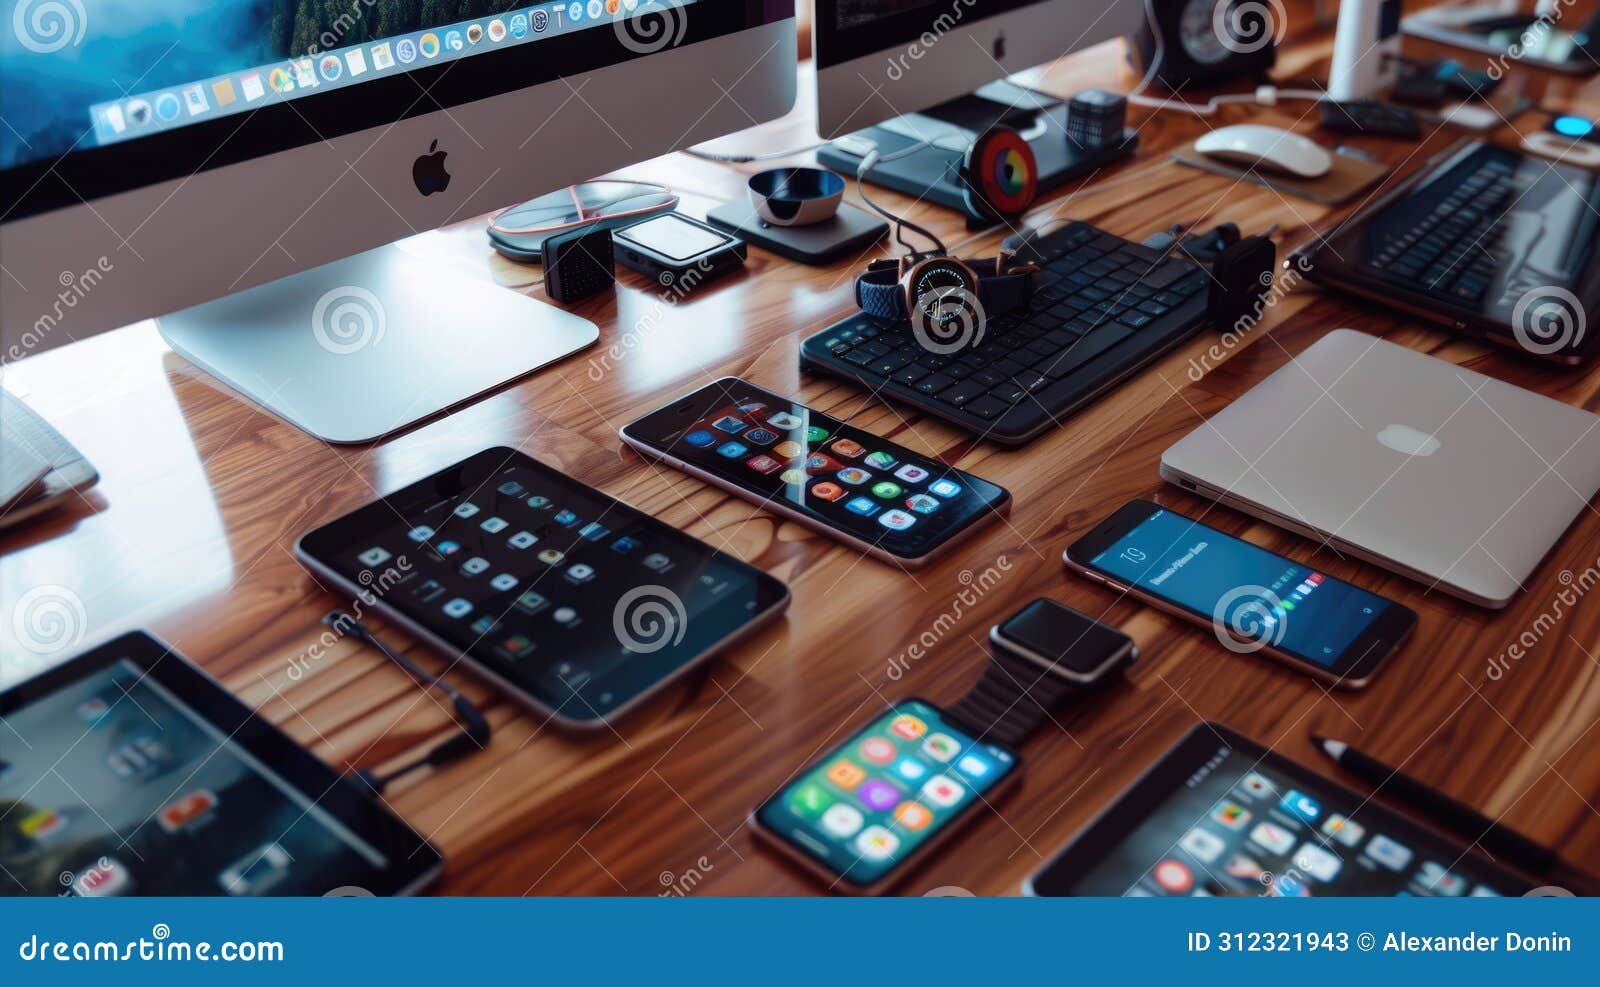 modern workspace setup with imac, macbooks, iphones, ipads, and apple watch